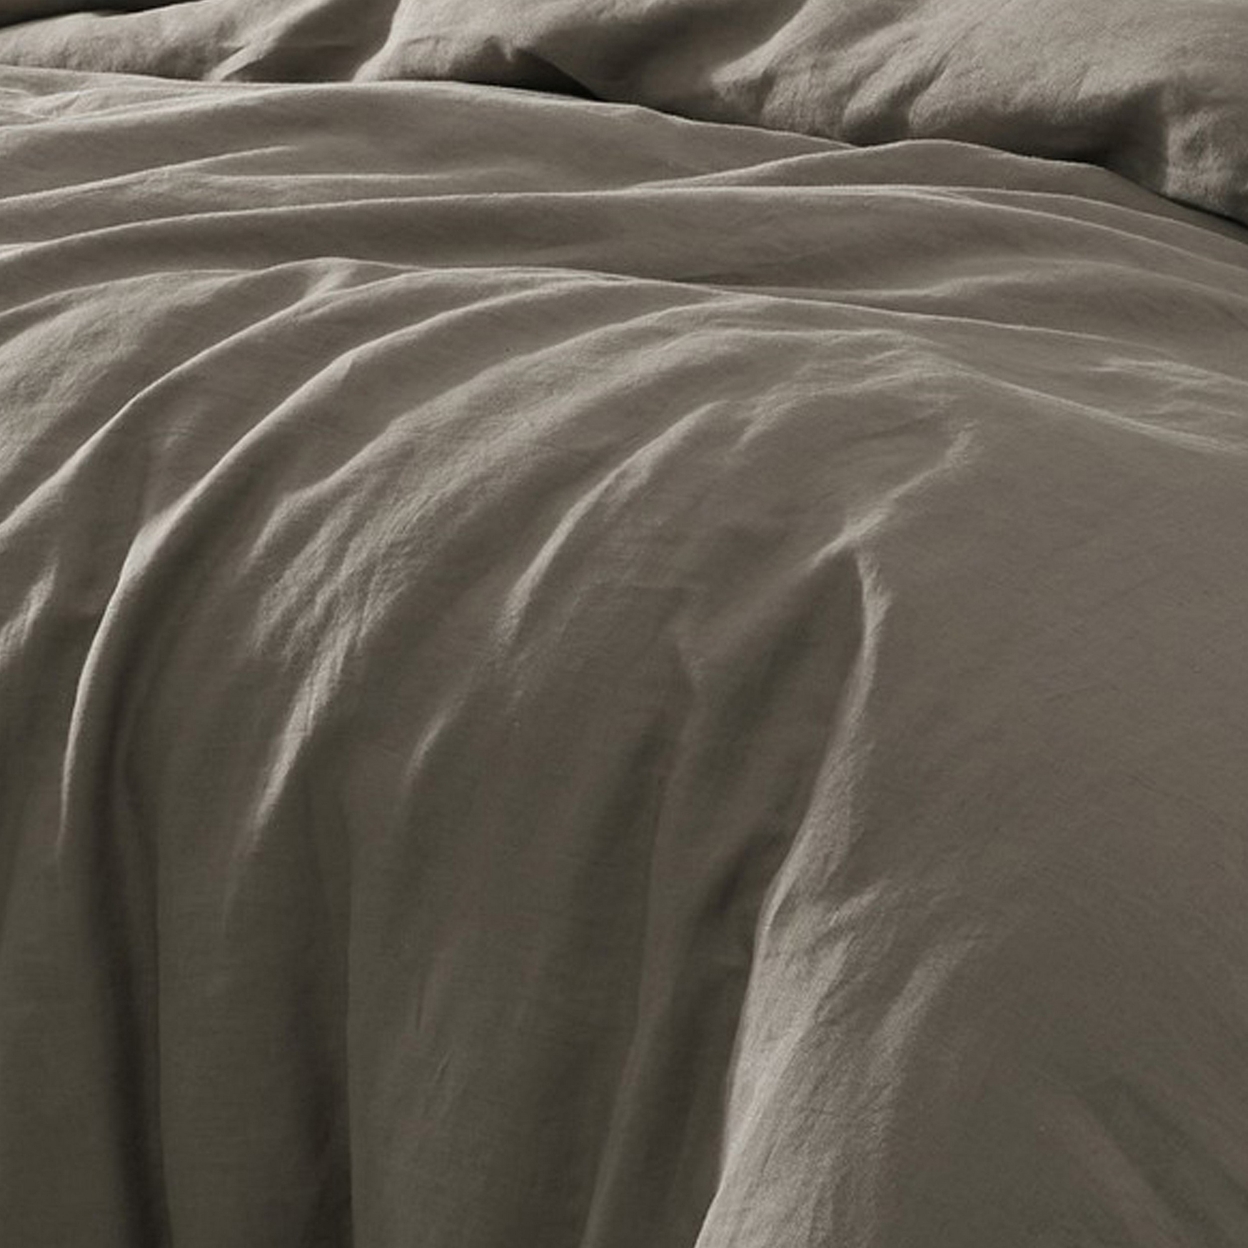 Edge 3 Piece Twin Size Duvet Comforter Set, Washed Linen, Charcoal Gray - Saltoro Sherpi